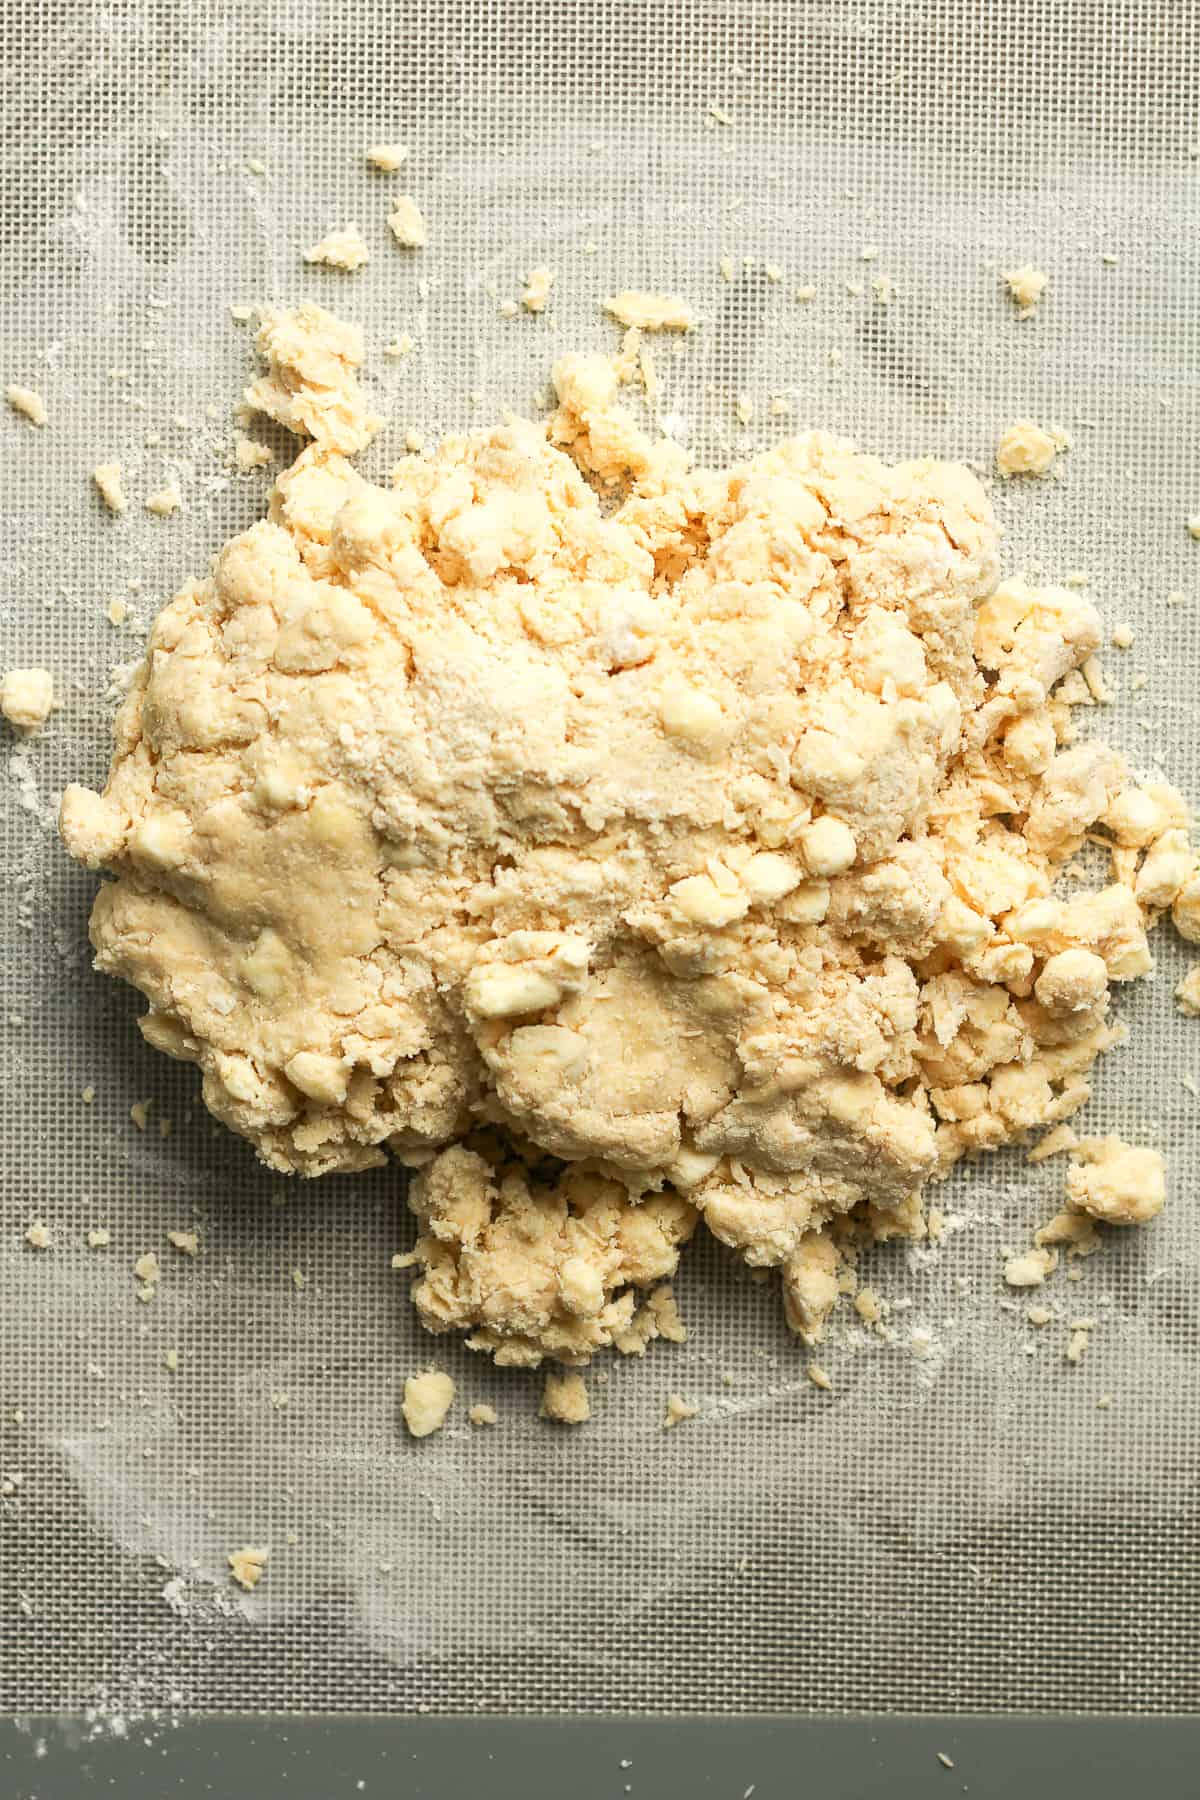 The shaggy scone dough on a baking mat.